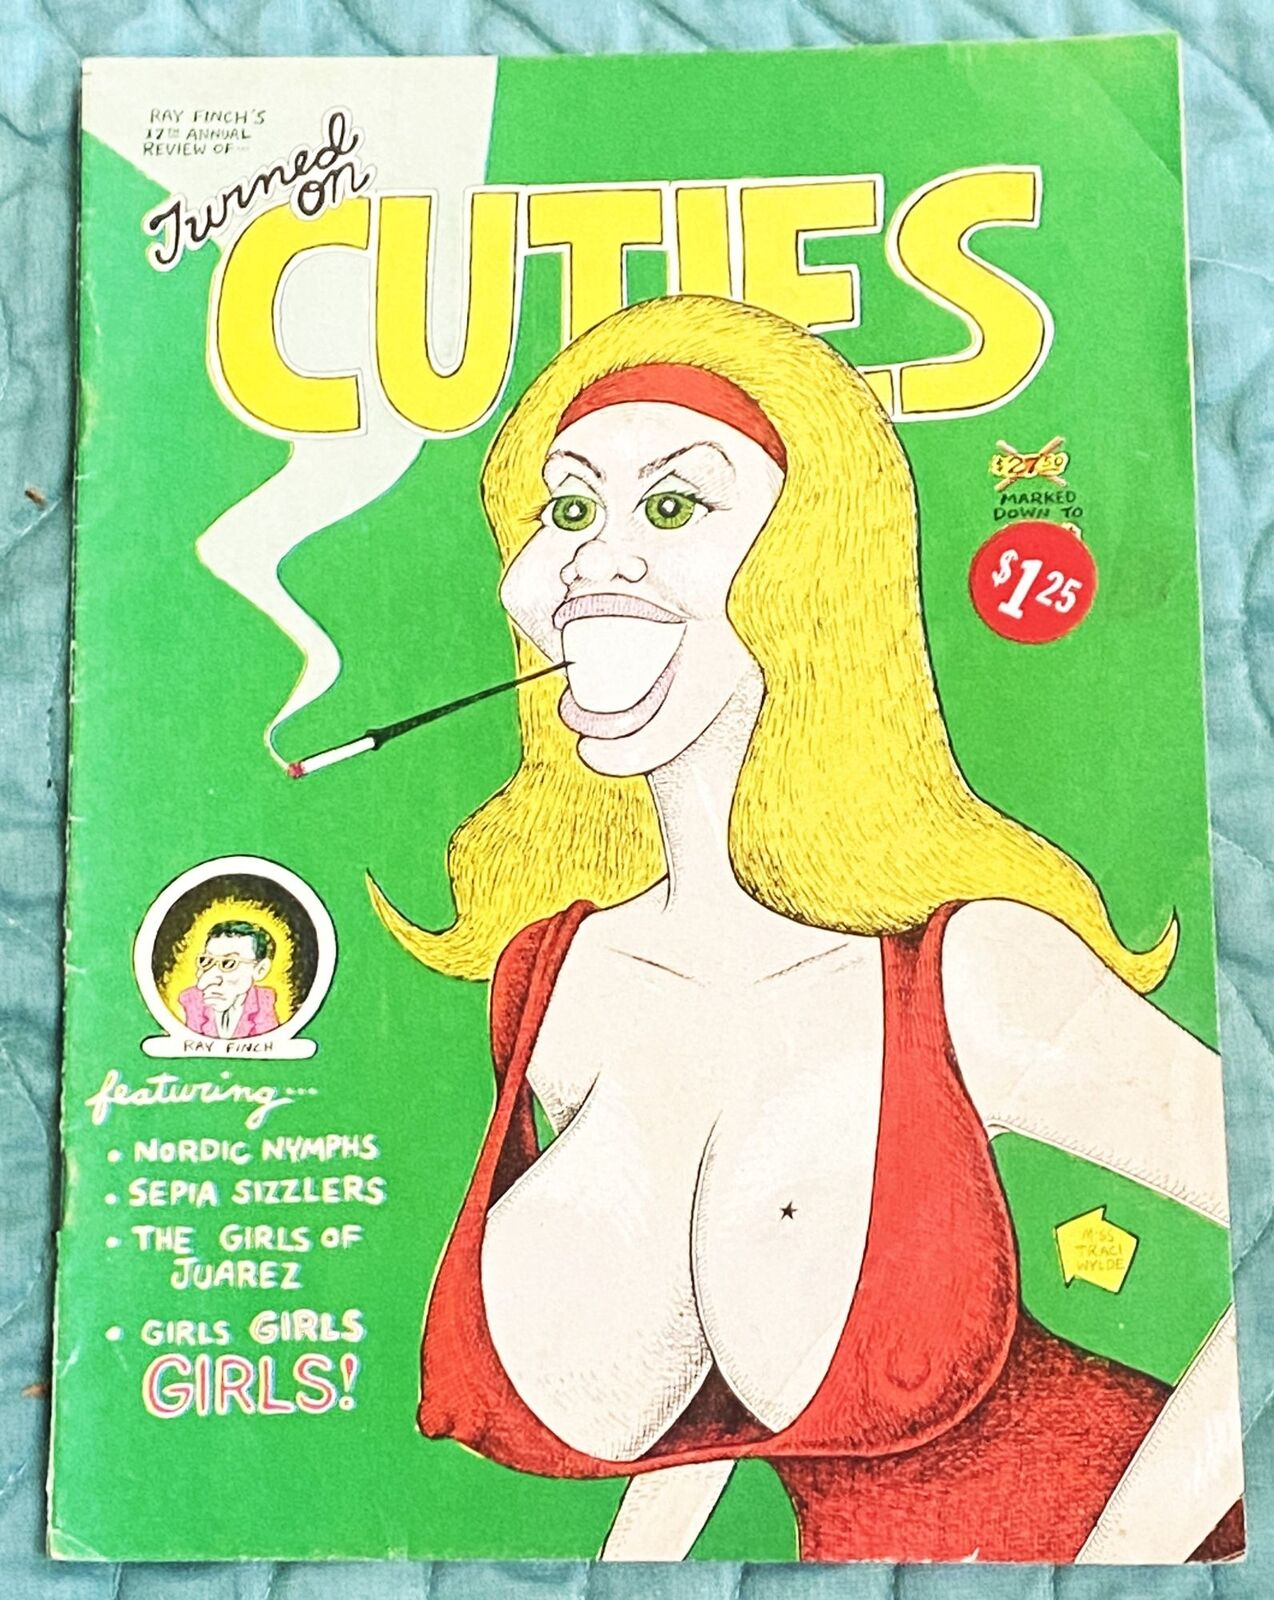 Robert Crumb Jay Lynch, Justin Green / TURNED ON CUTIES 1972